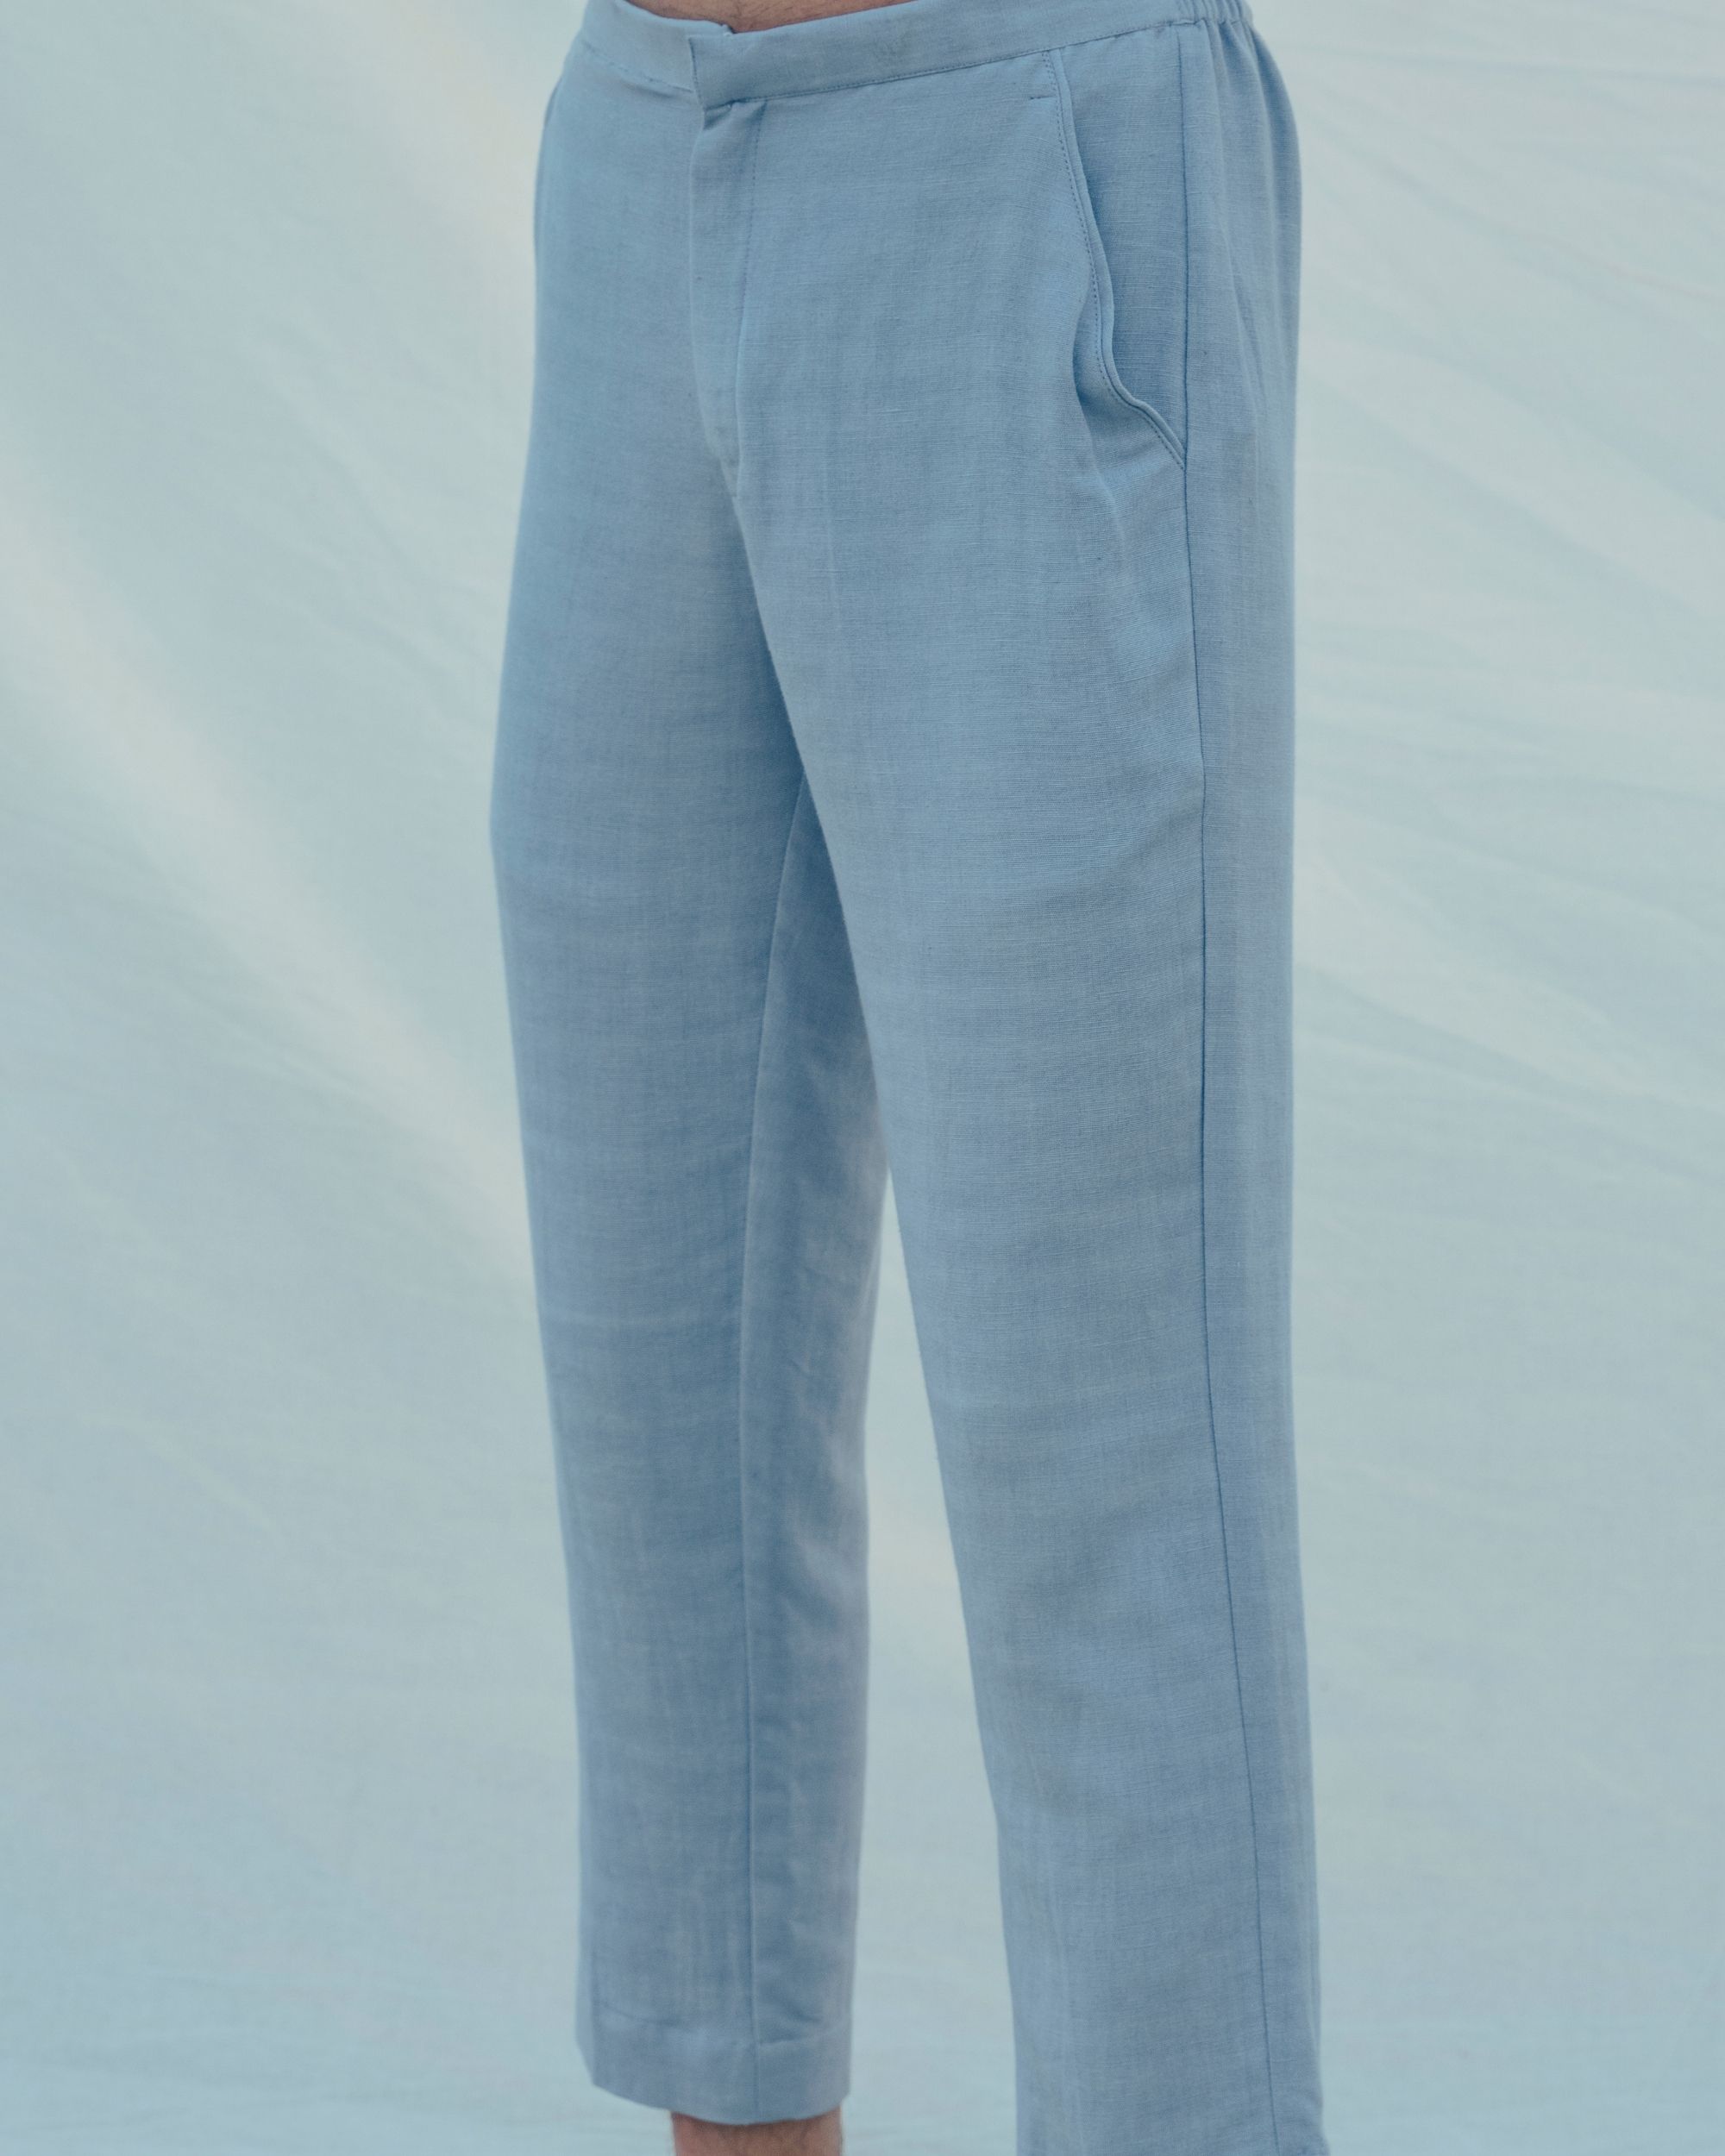 YUNDAN Cotton Linen Pants for Mens Fashion Wide Leg High Waist Sweatpants  Drawstring Regular Fit Print Trouser Sleepwear B-white XX-Large